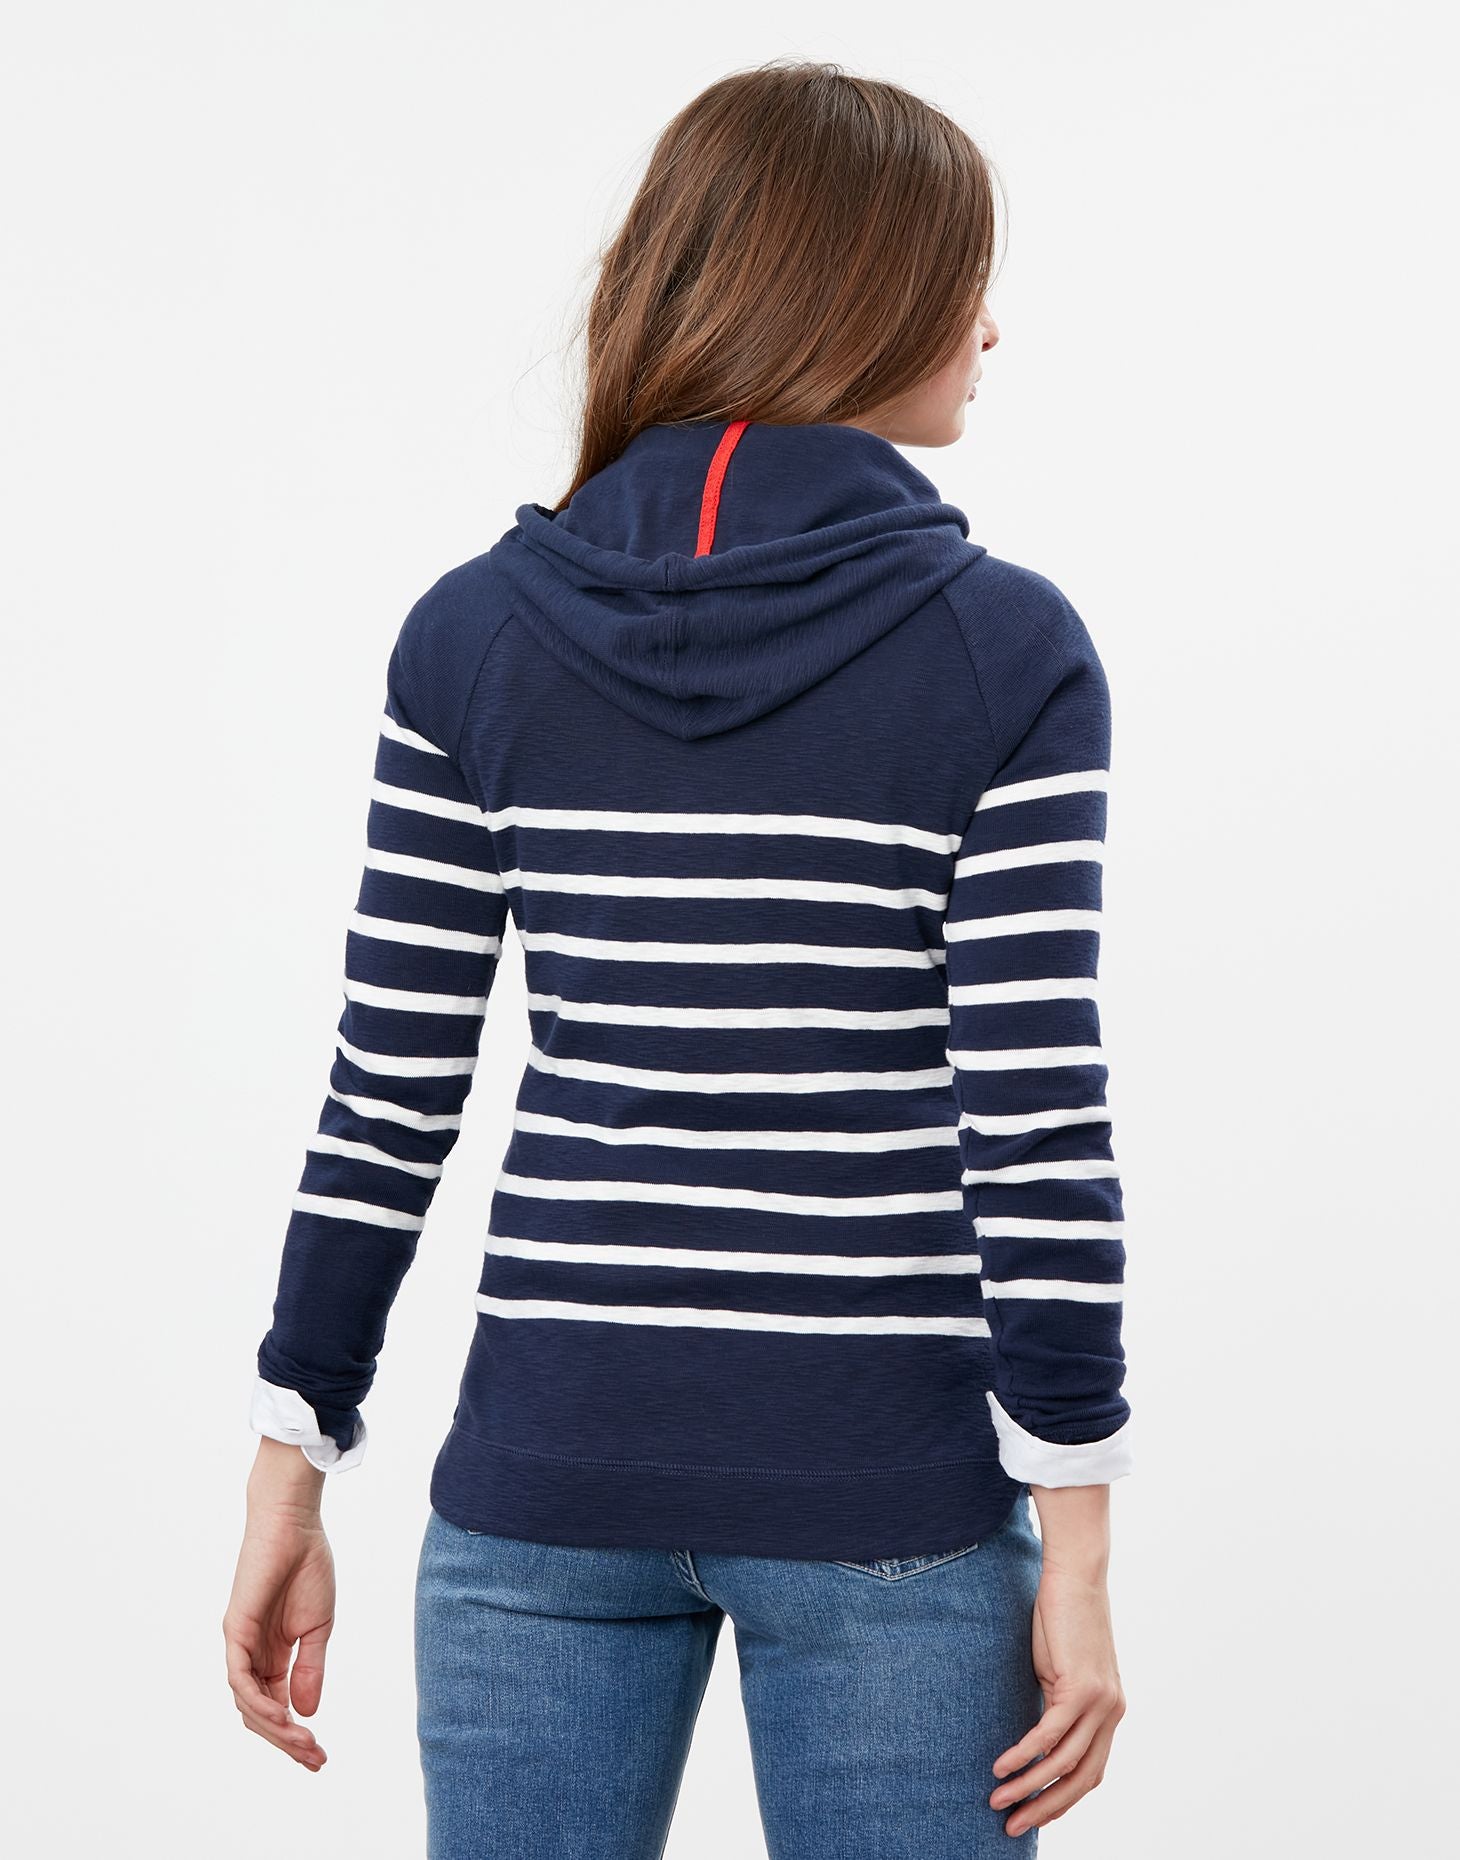 Marlston Stripe Hooded Sweatshirt in French Navy Cream Stripe